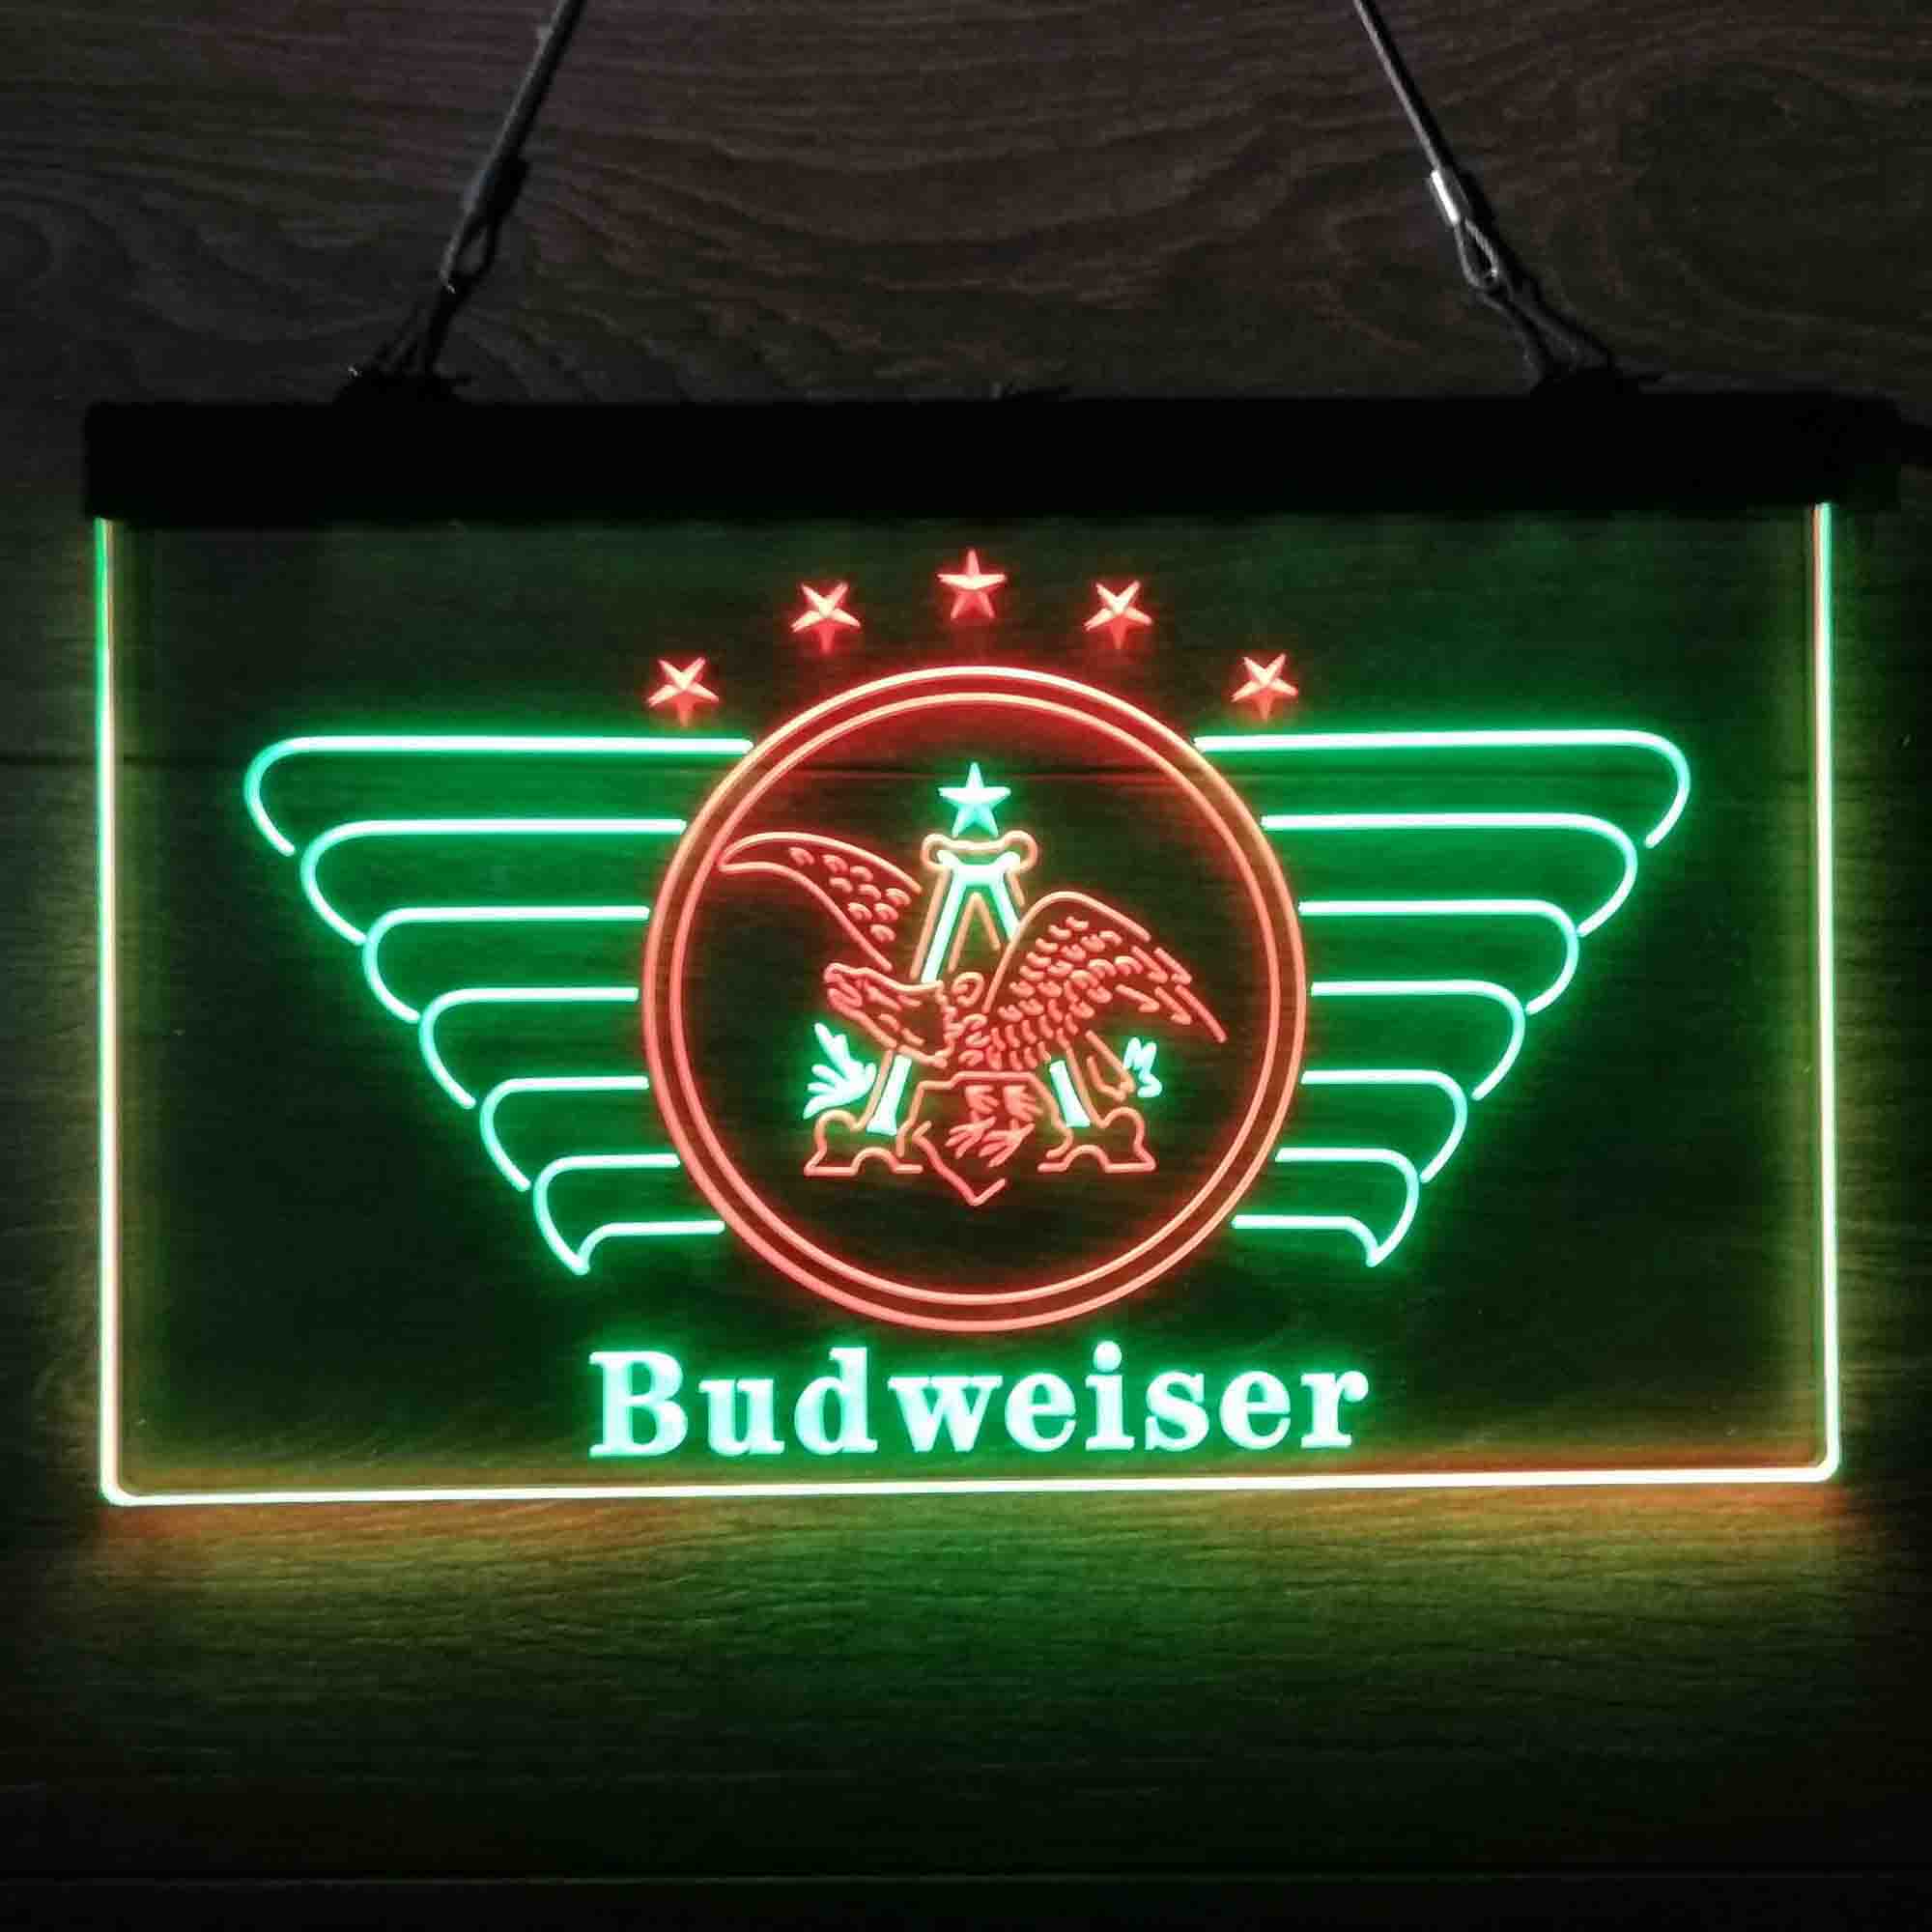 Budweiser Military Led Neon Light Up Sign